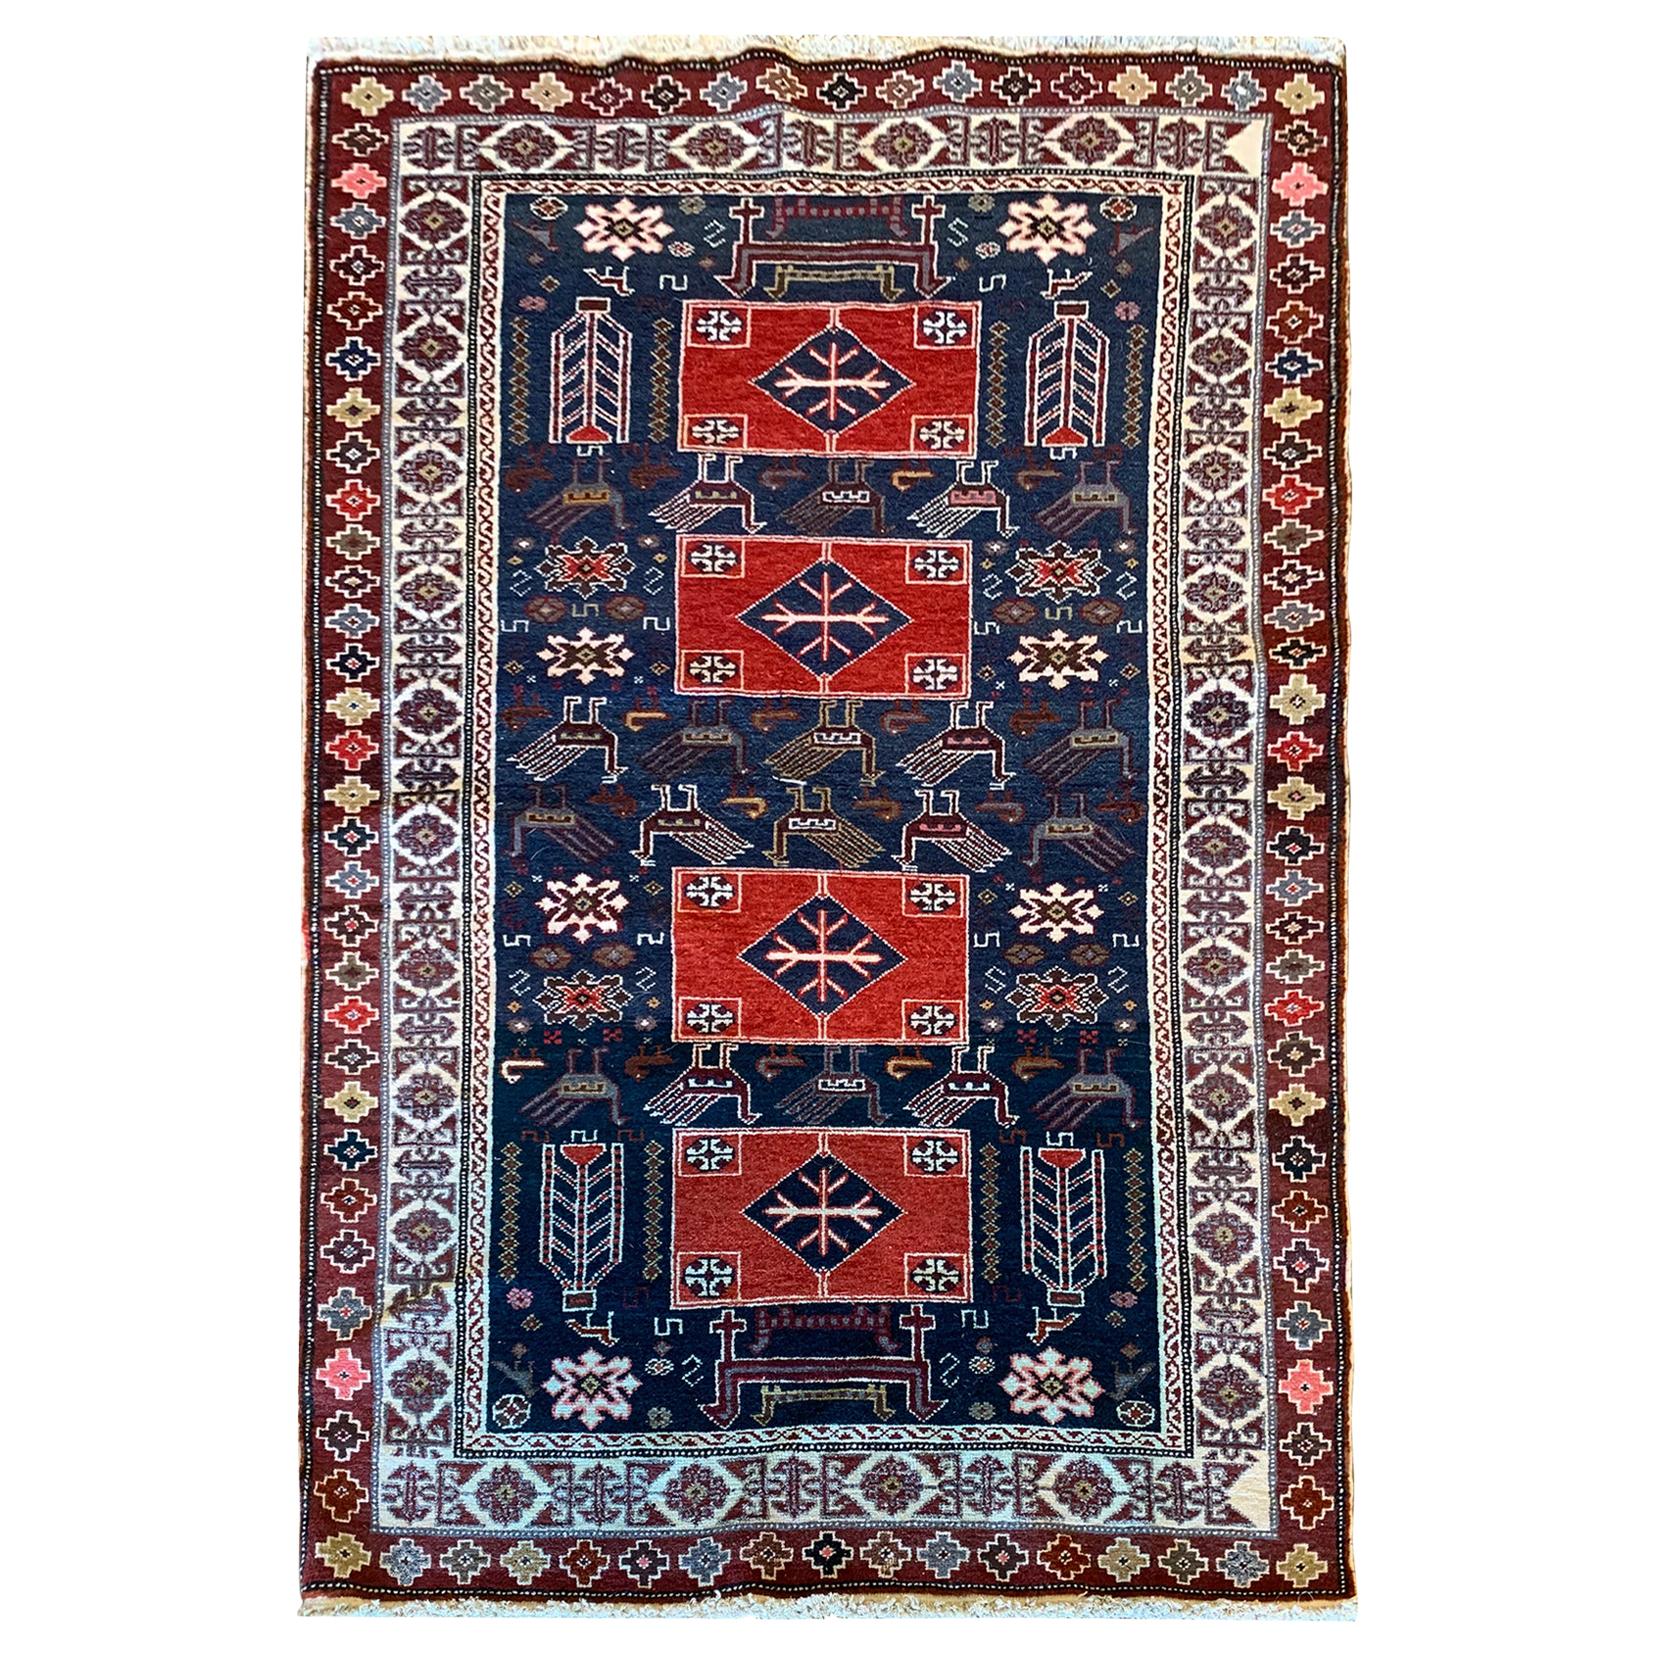 Azerbaijan Rug Antique Wool Blue Red Carpet Handmade For Sale